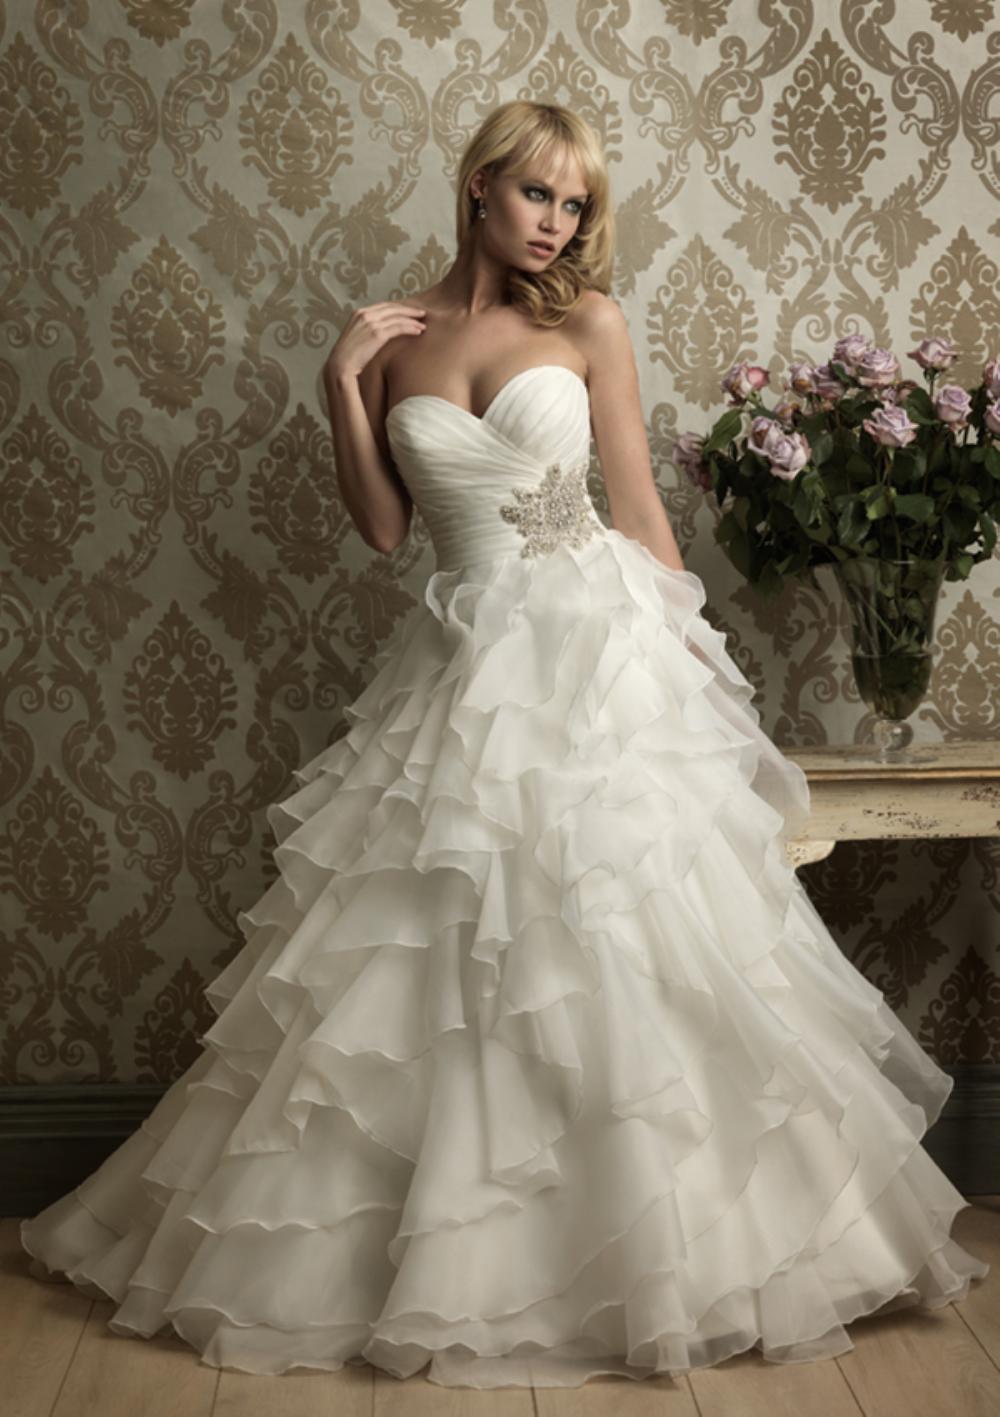 BEAUTIFUL ALLURE WEDDING DRESS - Style 8862, Size 10- $900 OBO